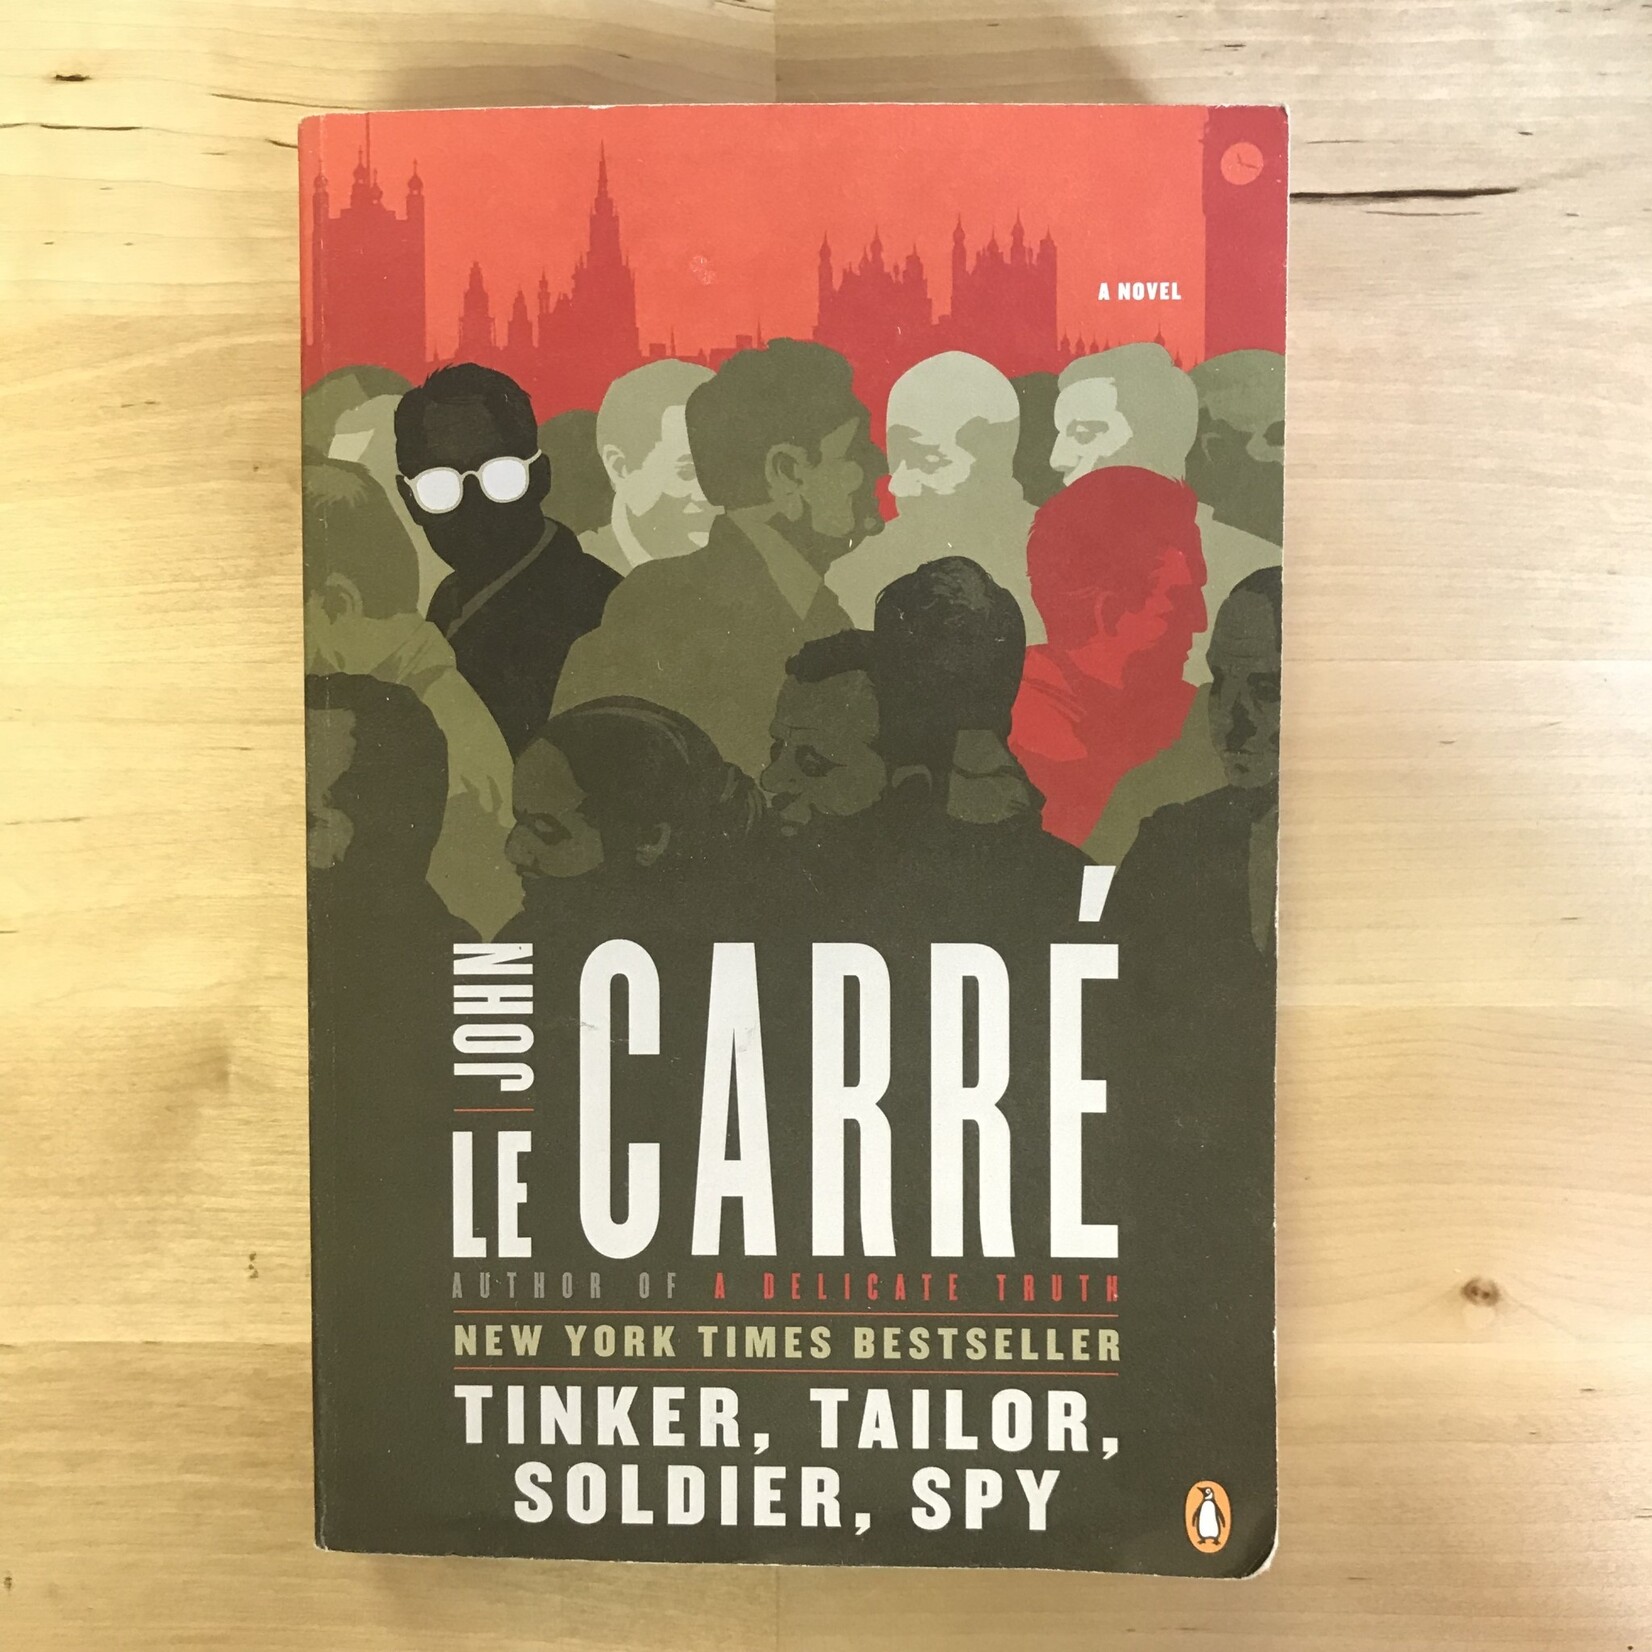 John Le Carre - Tinker, Tailor, Soldier, Spy - Paperback (USED)